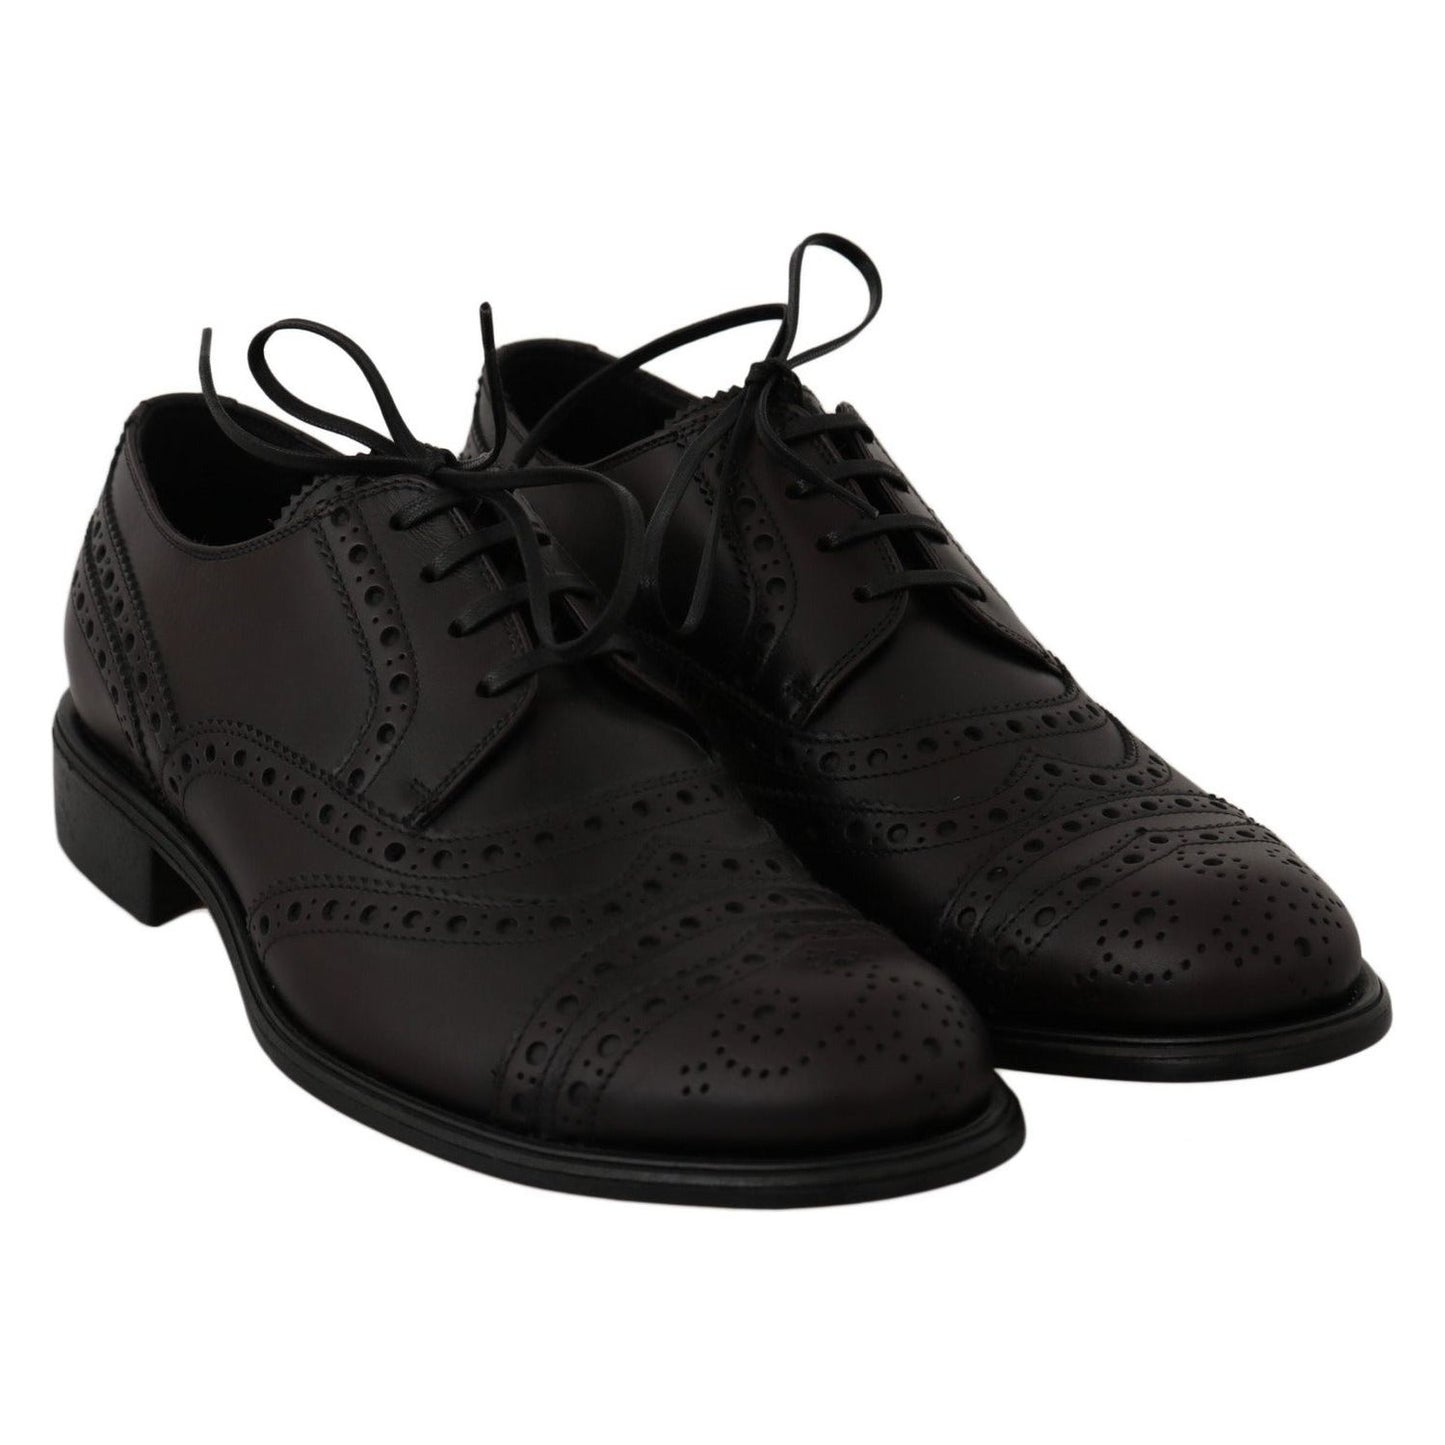 Dolce & Gabbana Elegant Bordeaux Wingtip Derby Dress Shoes black-leather-wingtip-oxford-dress-shoes-1 Dress Shoes IMG_8977-scaled.jpg